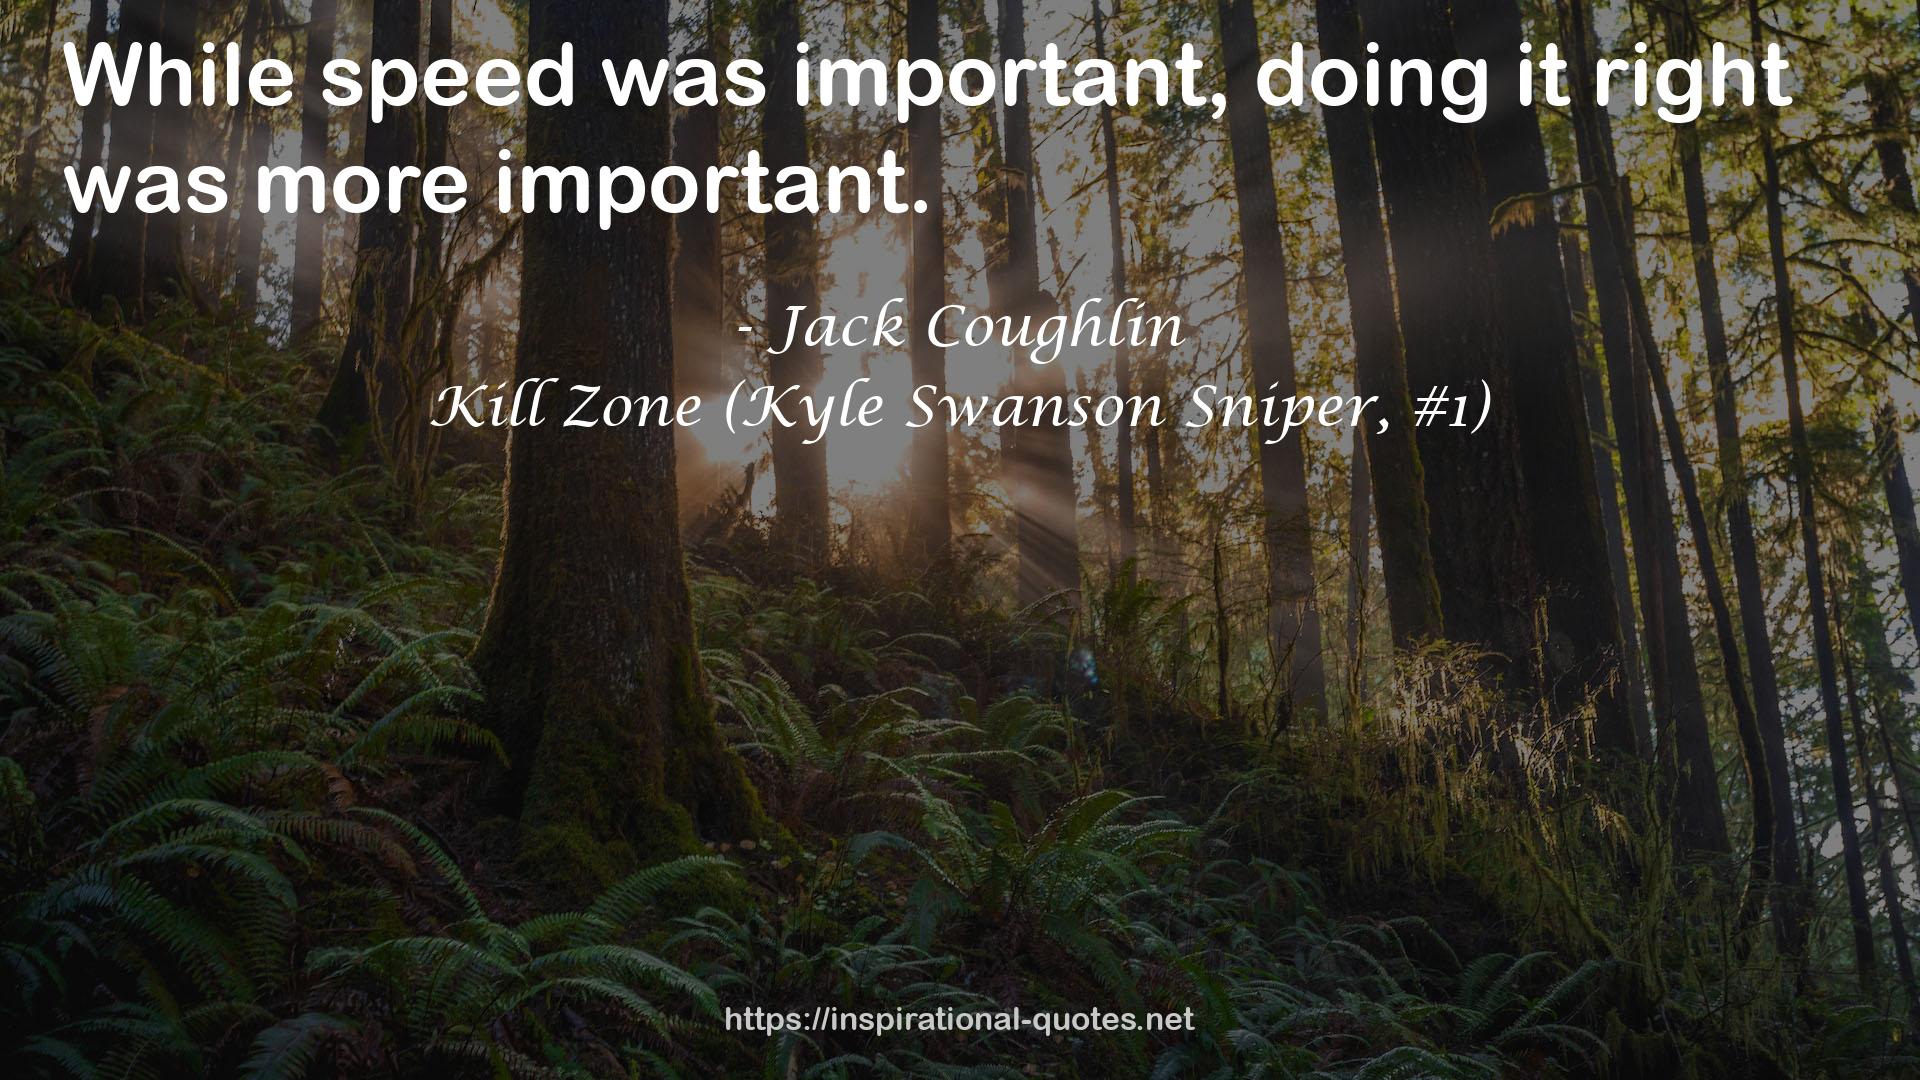 Kill Zone (Kyle Swanson Sniper, #1) QUOTES